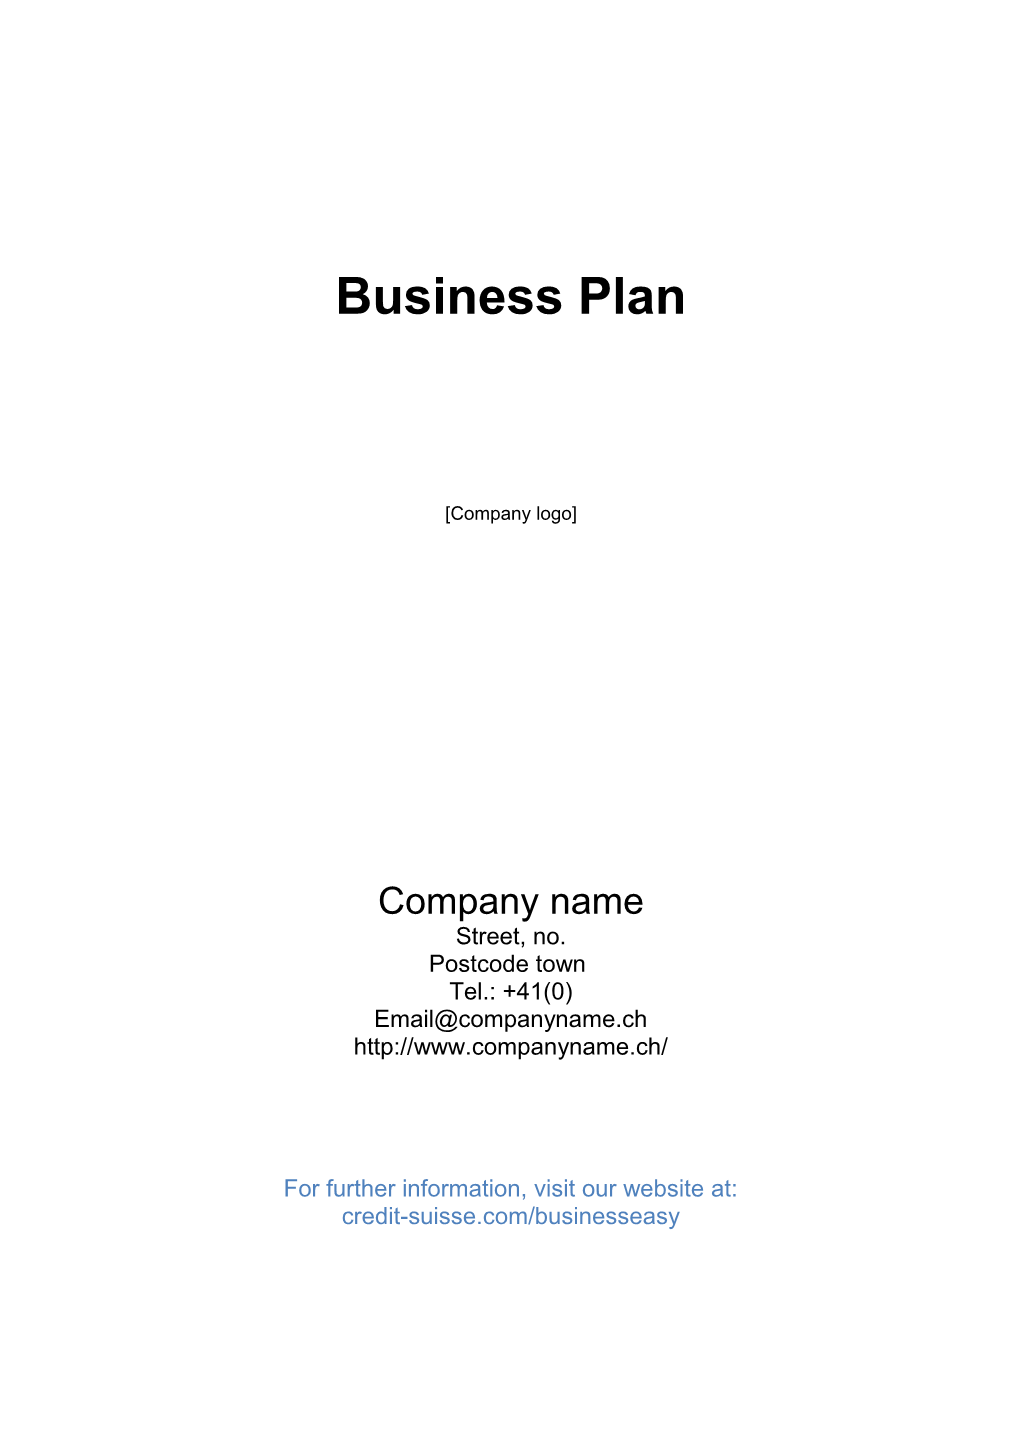 Business Plan Company Name